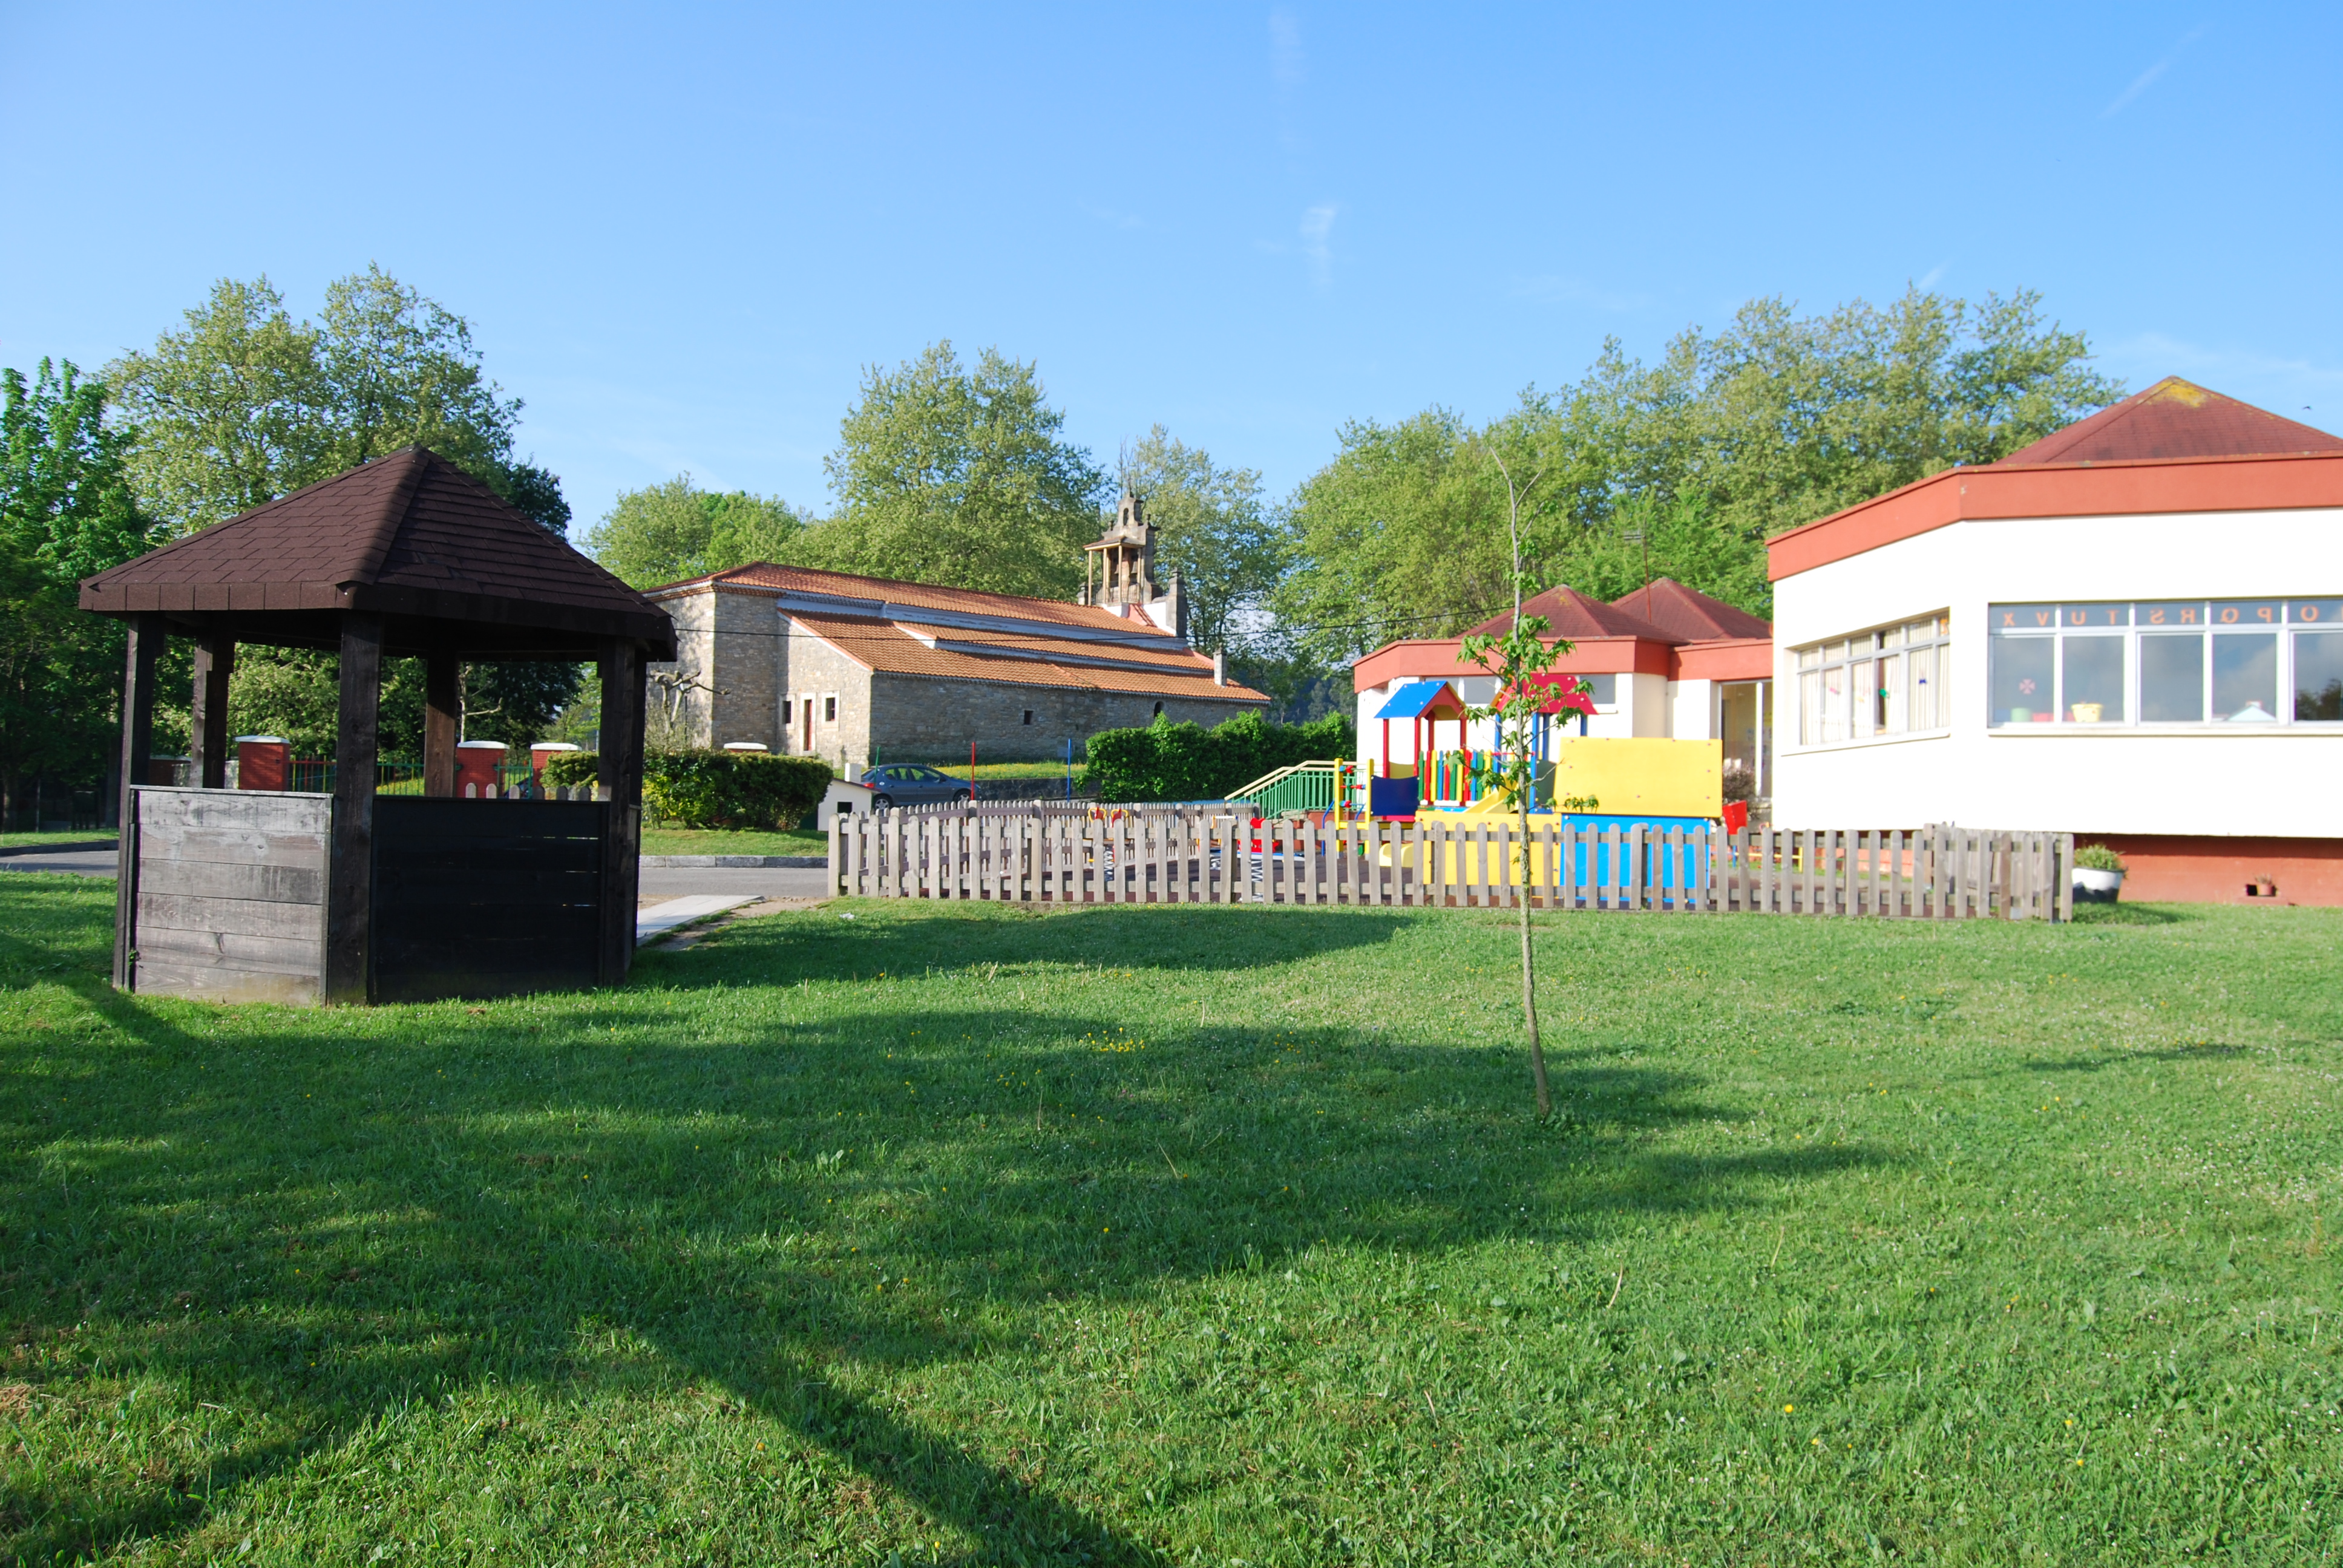 Centro de educación infantil San Eutiquio | Desde 1980 educando